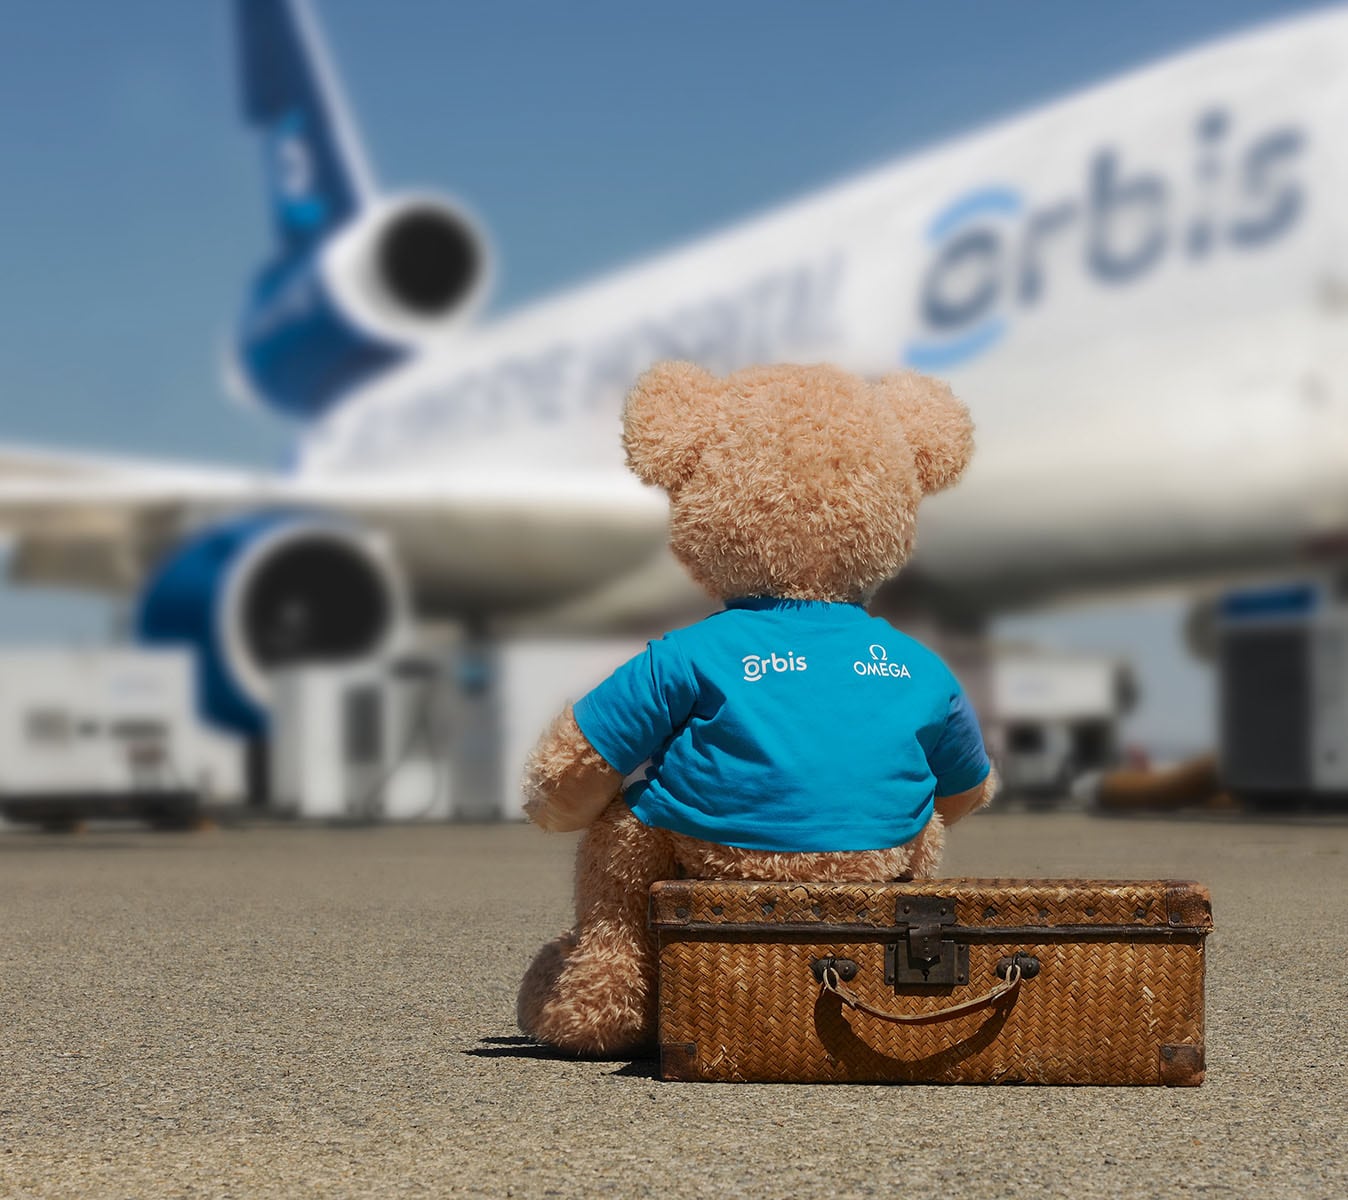 The Orbis teddy bear mascot sitting next to the Orbis Flying Eye Hospital aircraft